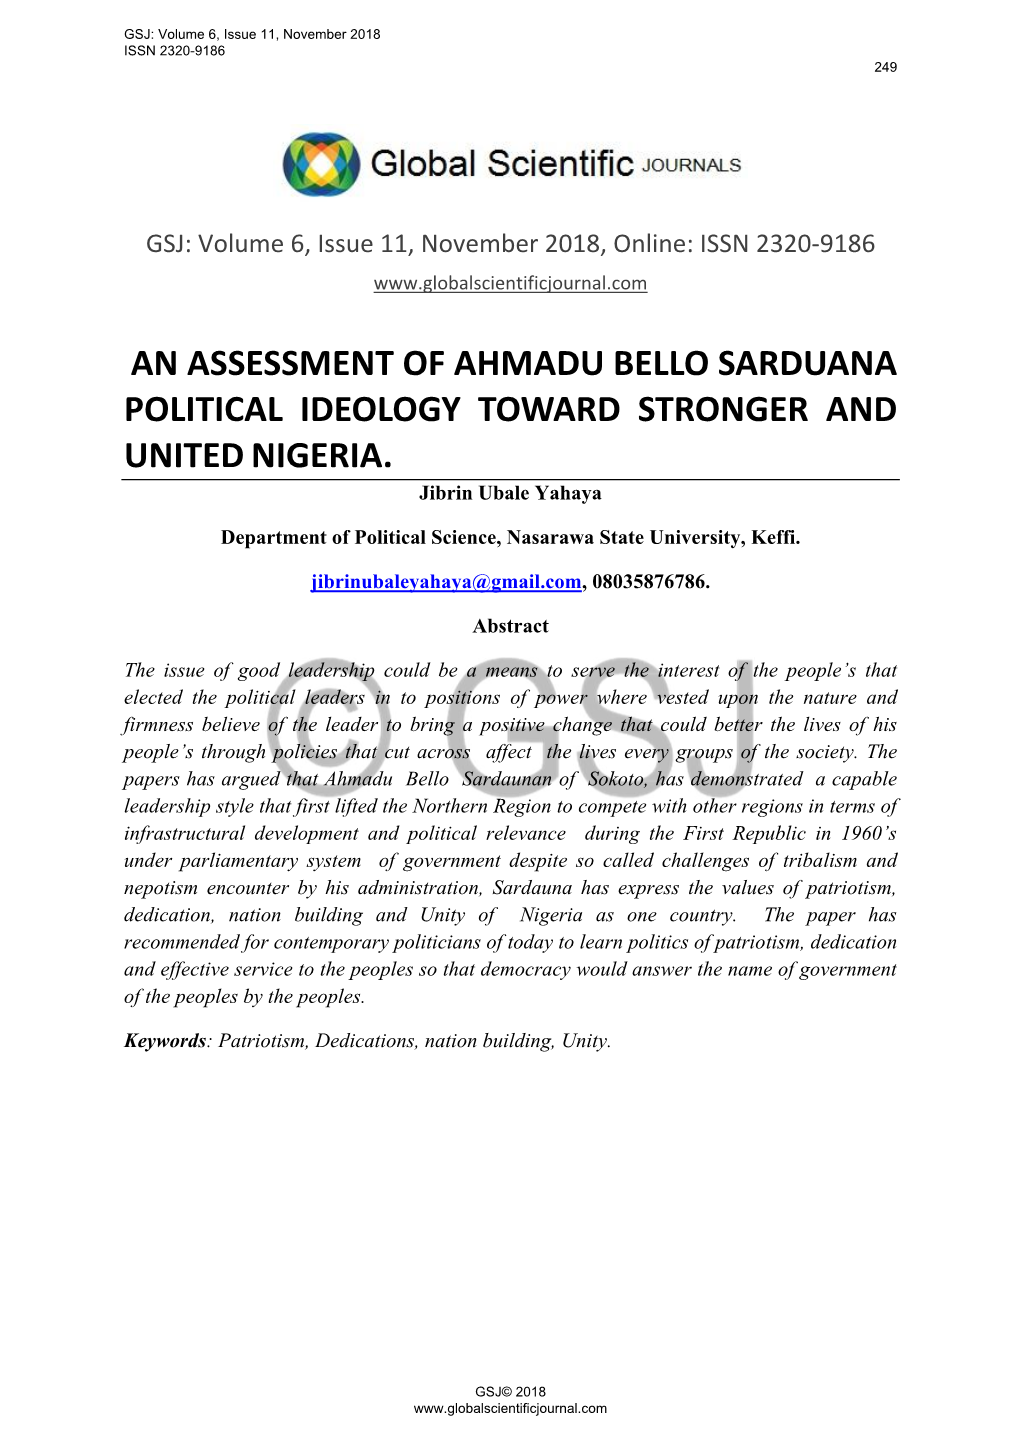 An Assessment of Ahmadu Bello Sarduana Political Ideology Toward Stronger and United Nigeria